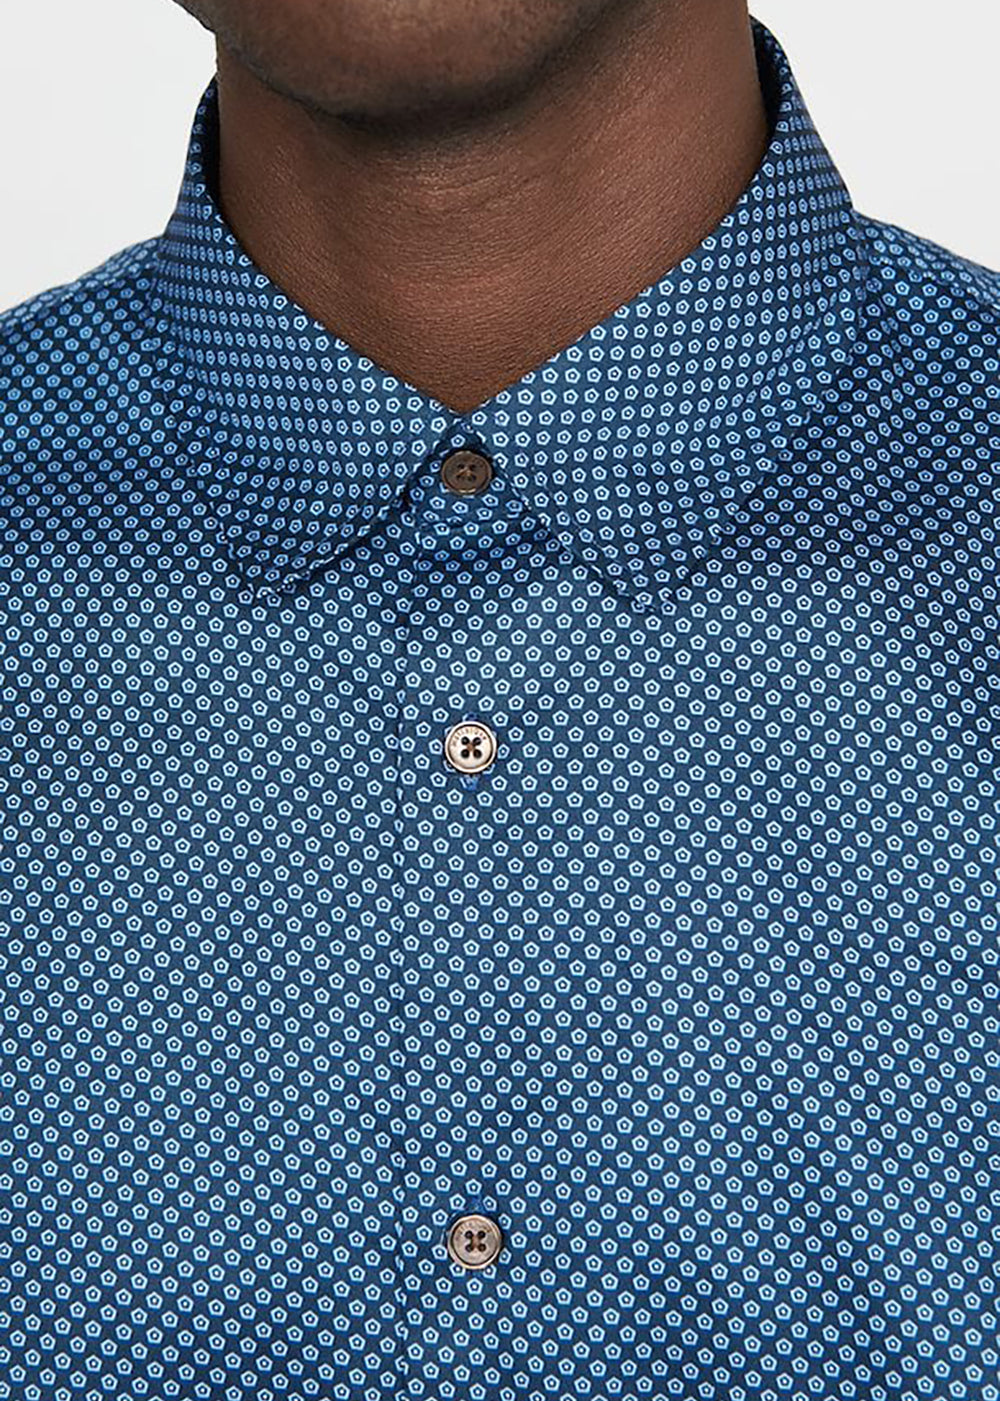 Trostol Button Up Short Sleeve Shirt - Dark navy - Matinique Canada - Danali